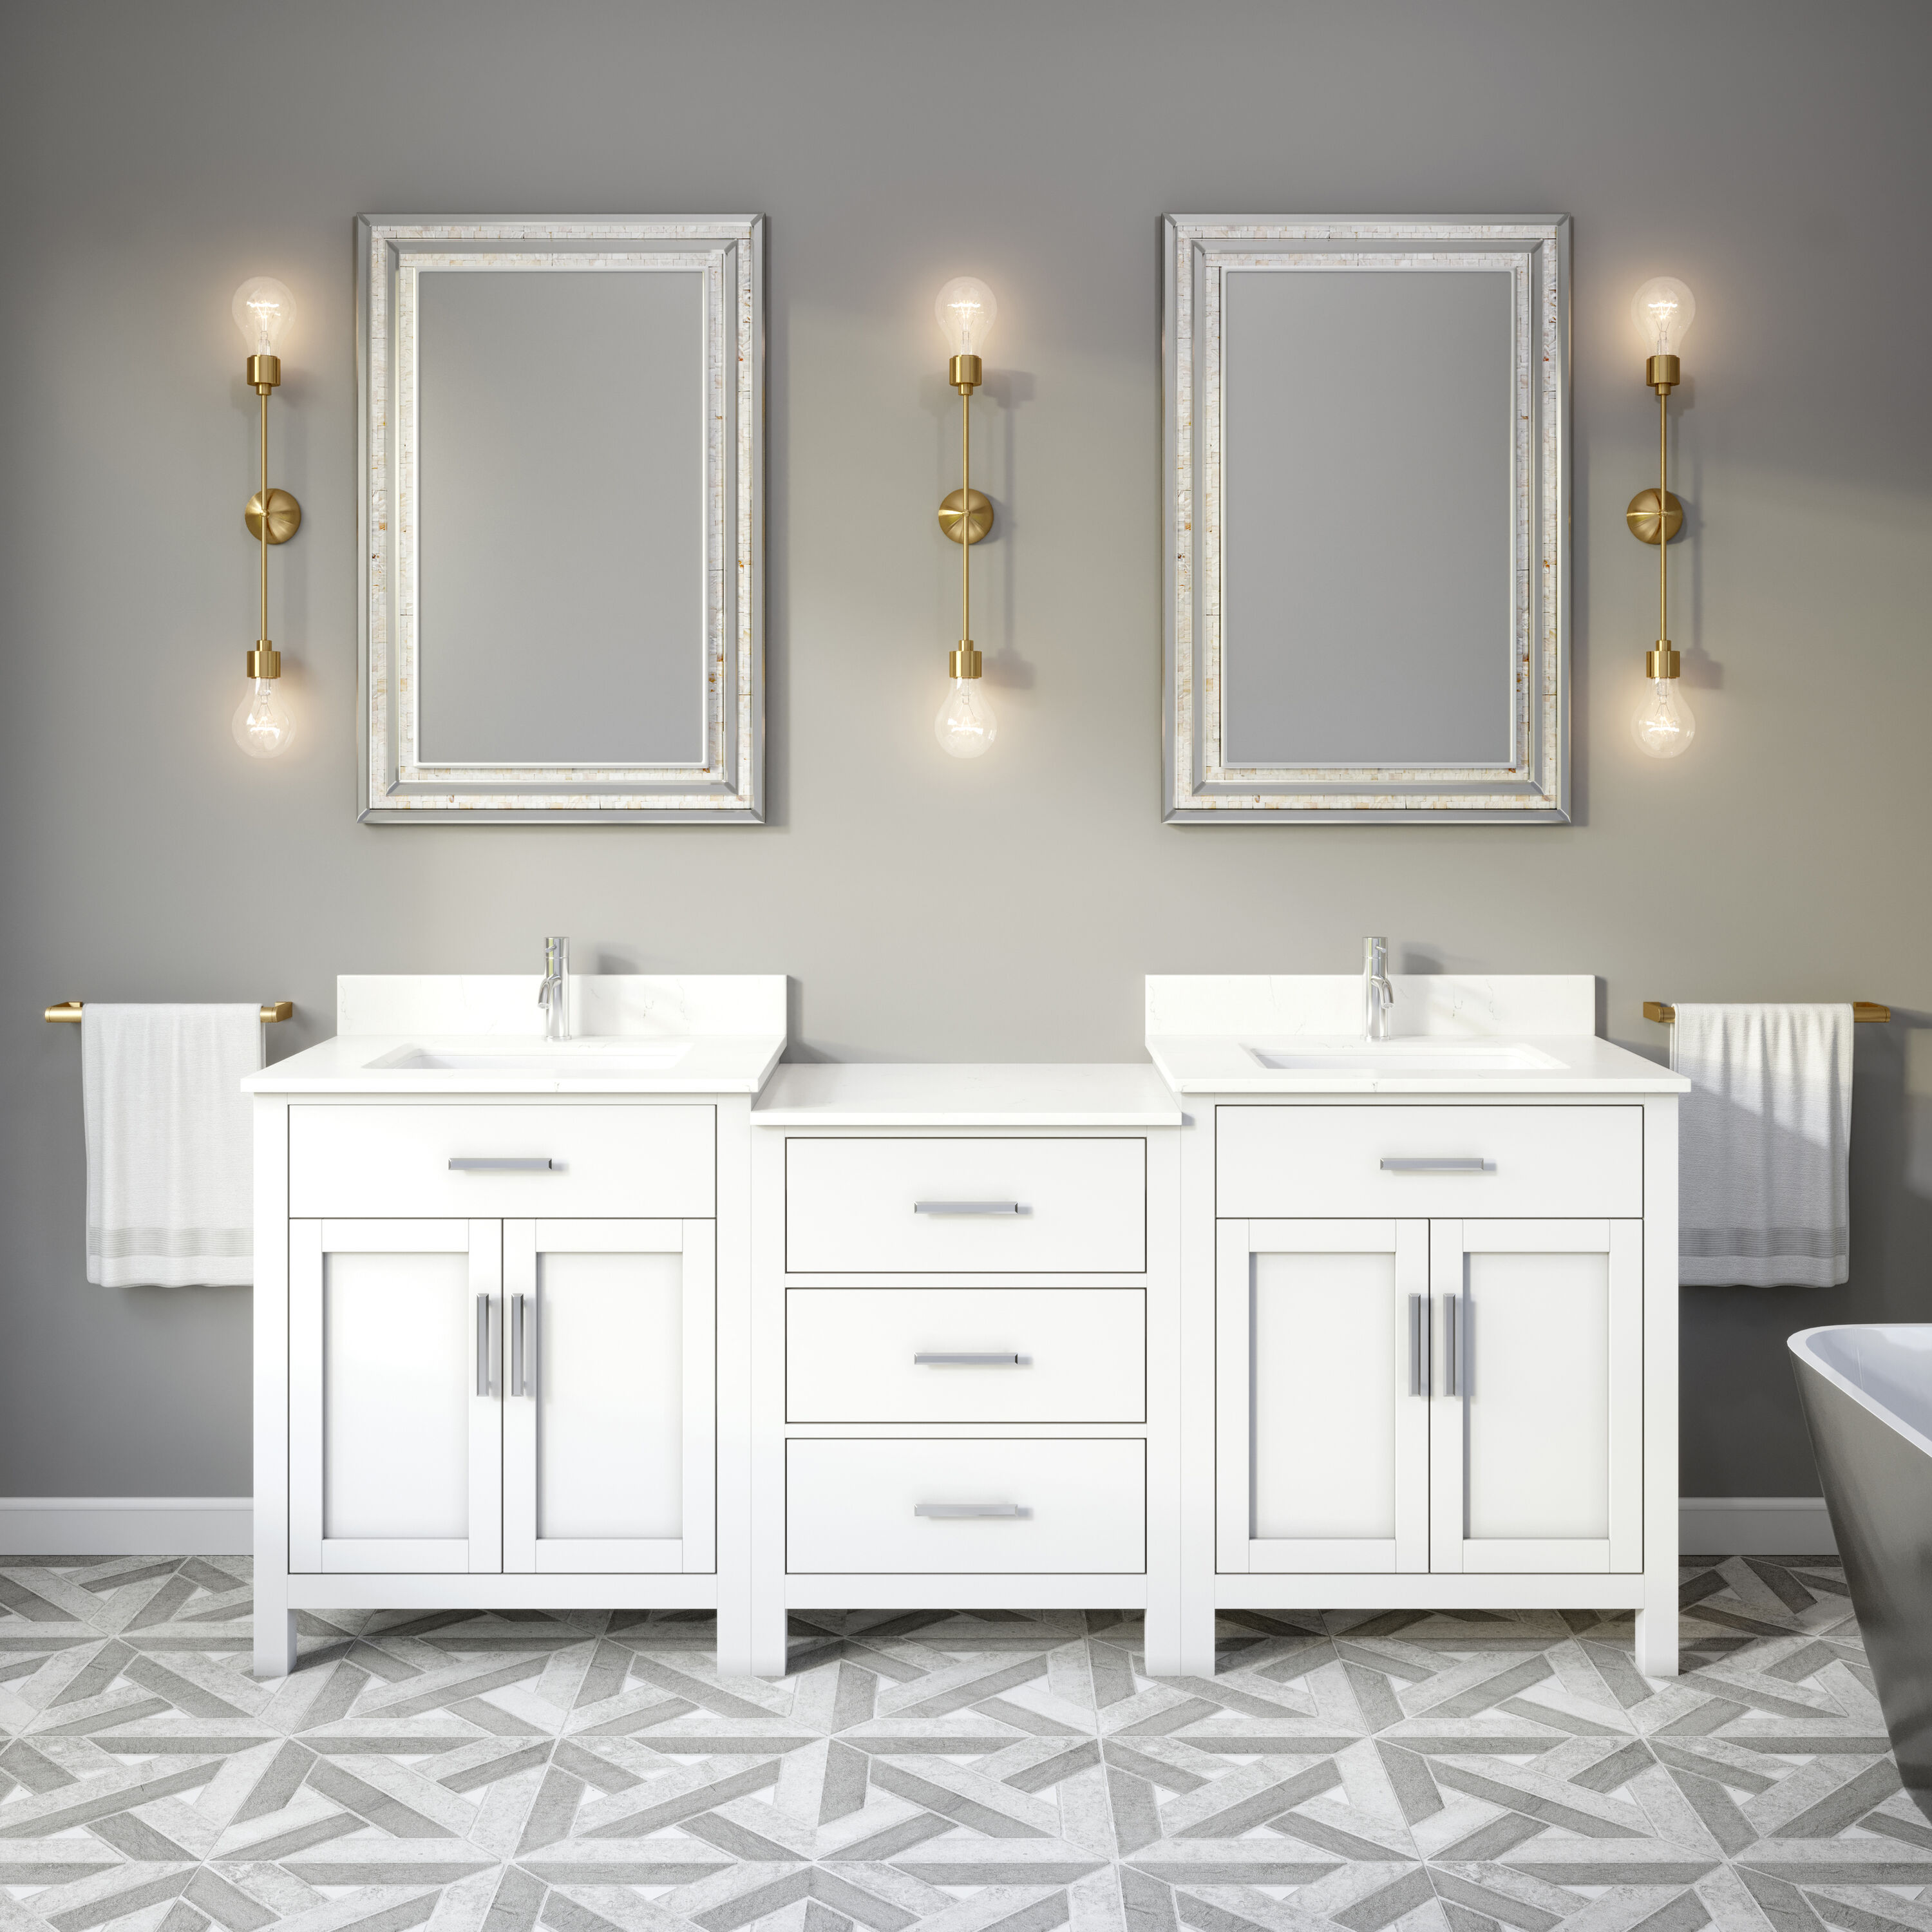 Farmhouse 72 in Double Sink Bathroom Vanity in Grey with Calacatta Gold  Quartz Countertop